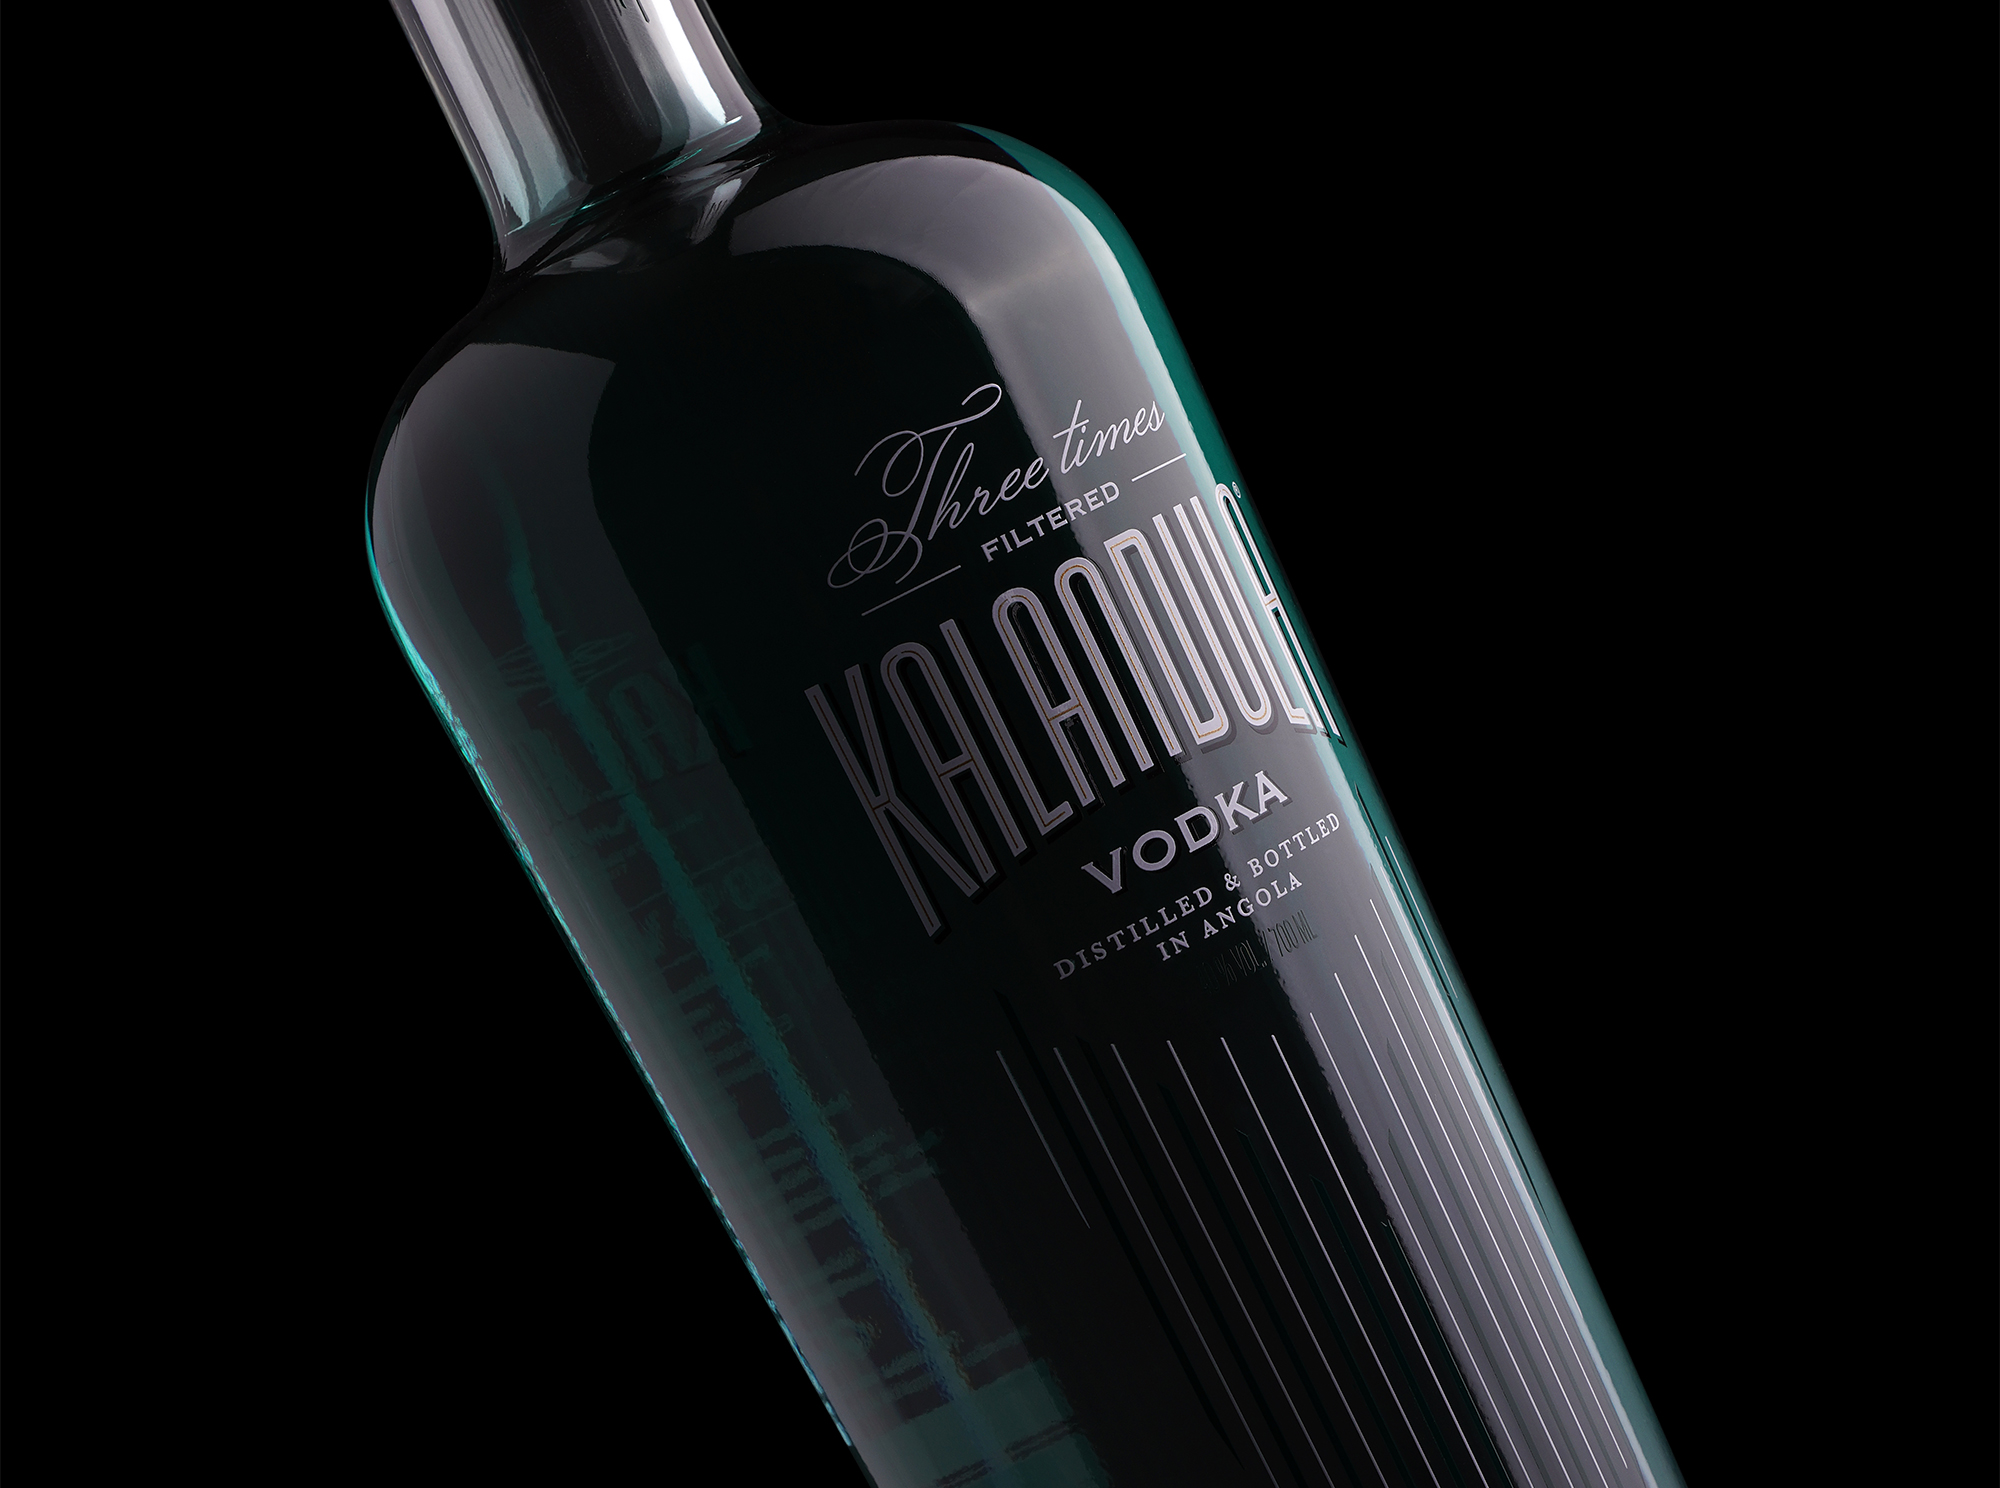 Kalandula – The First Angolan Vodka